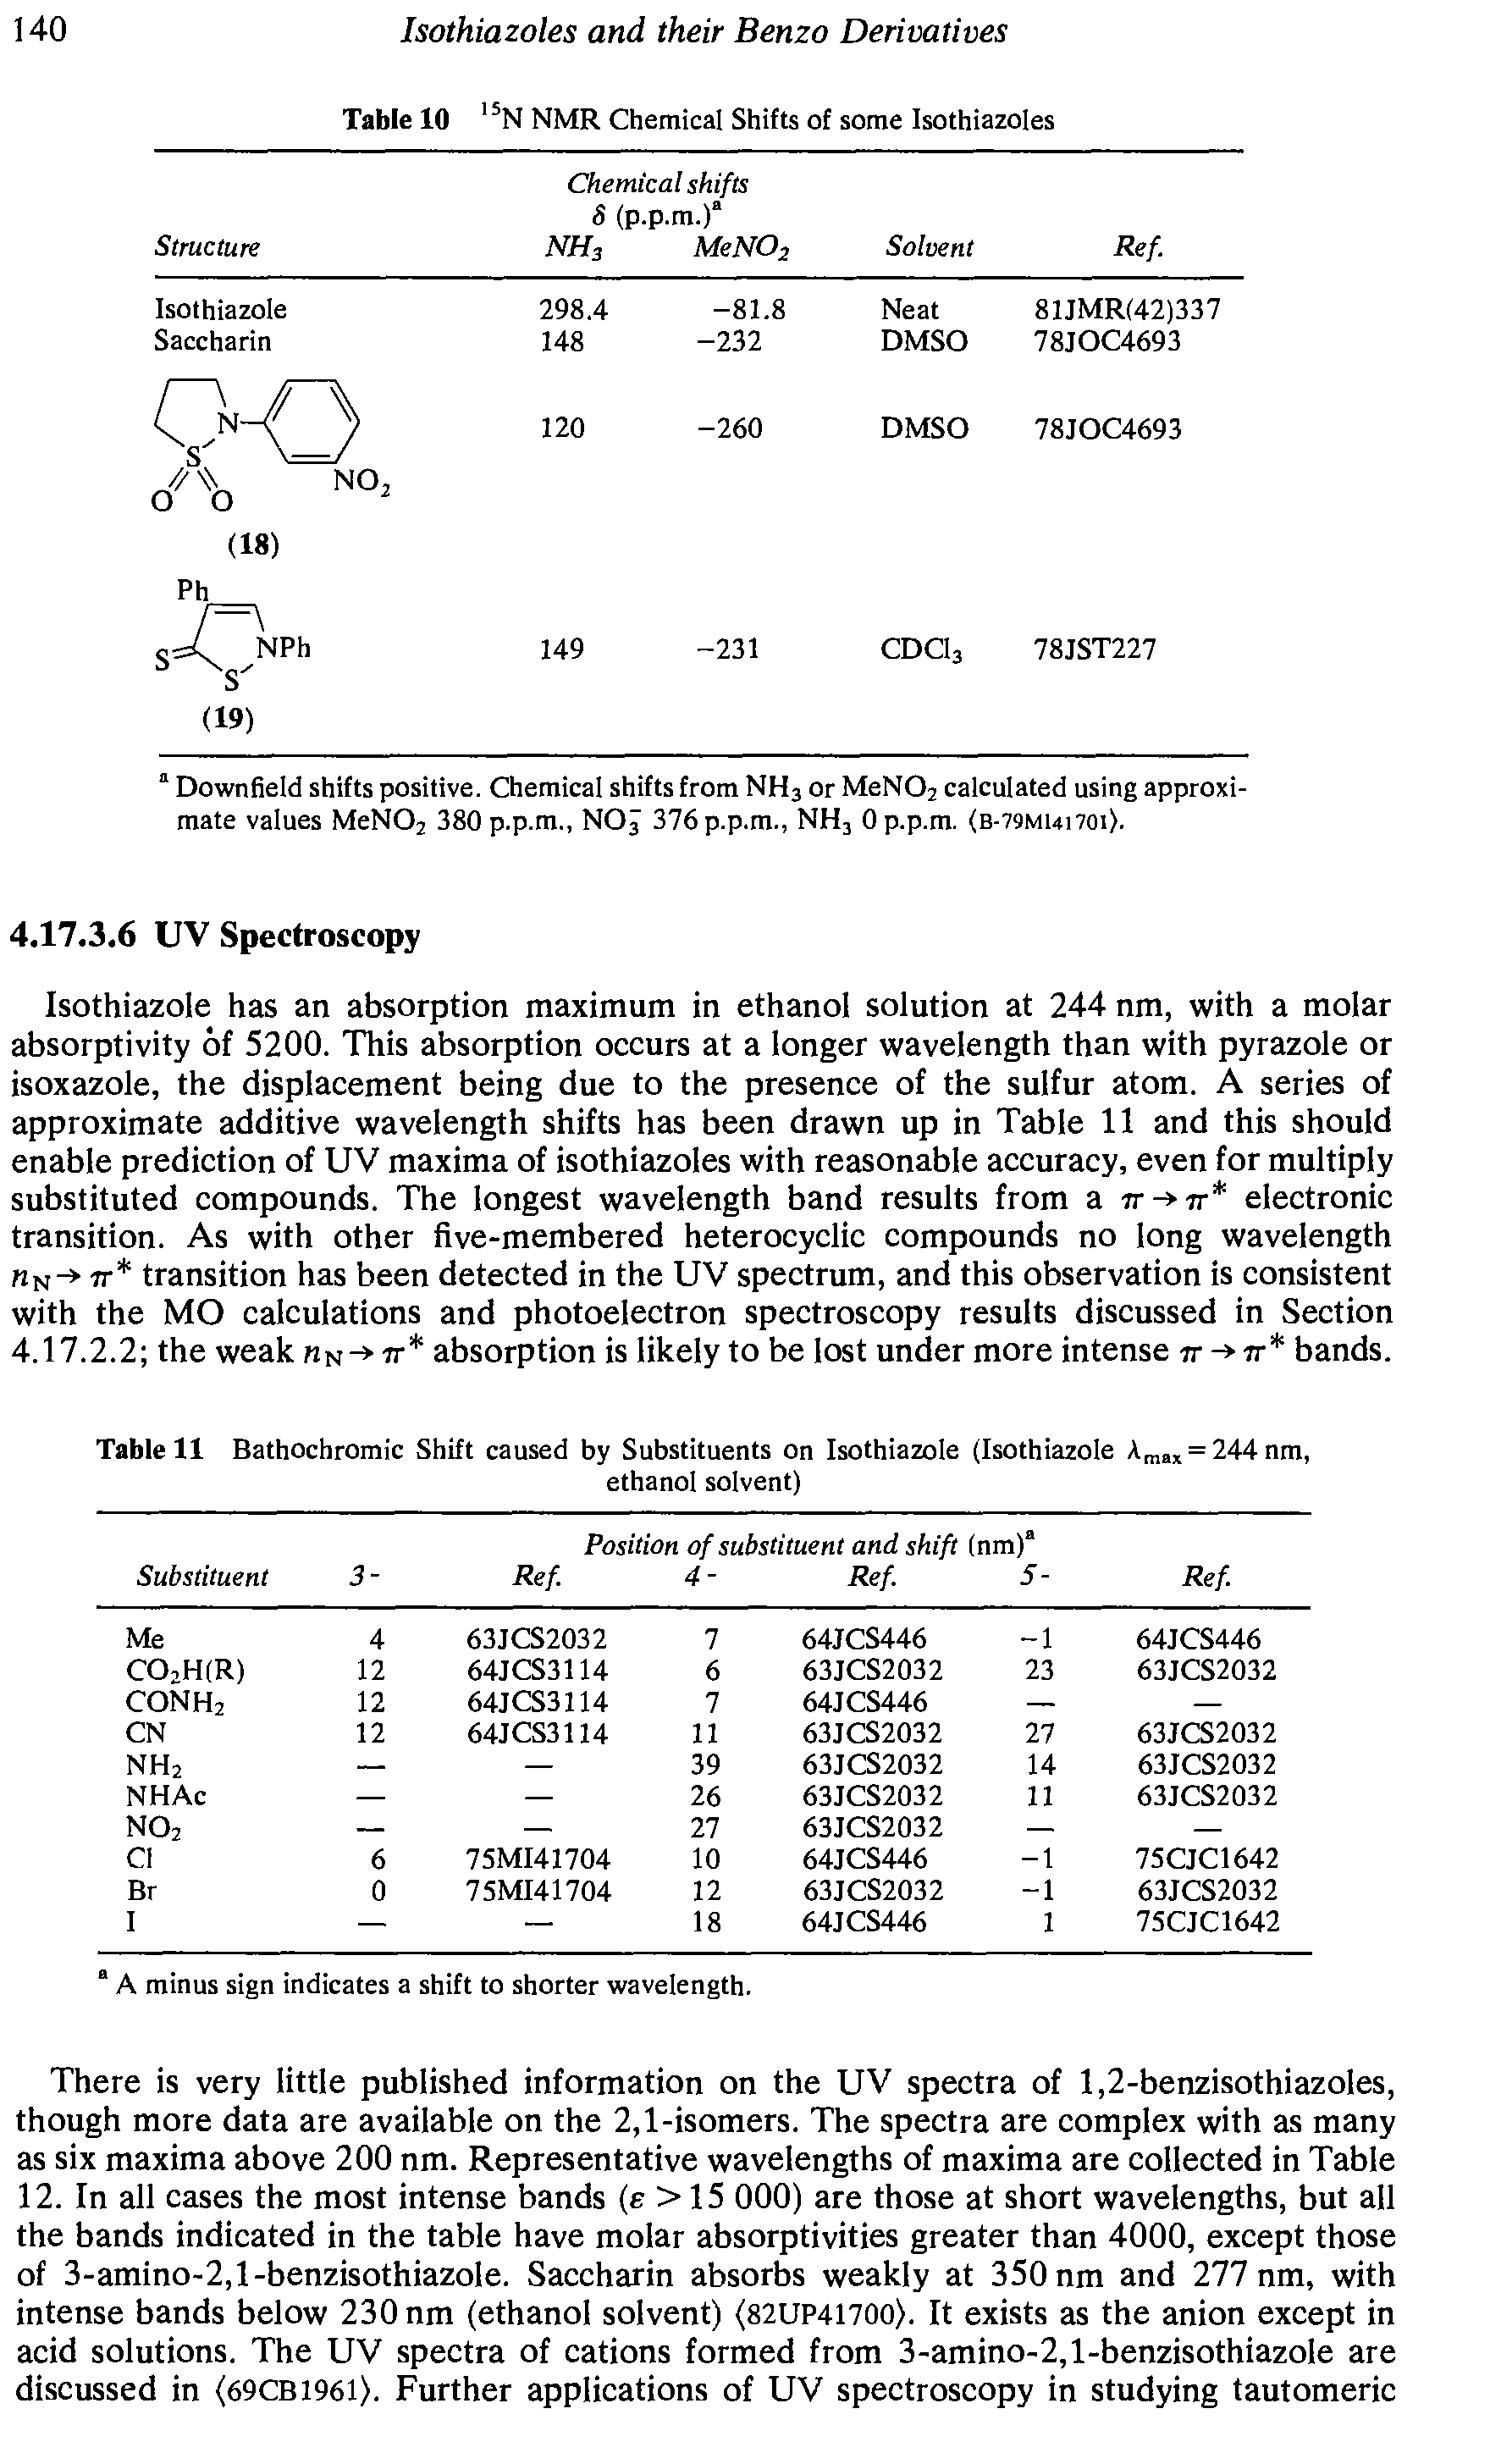 Table 11 Bathochromic Shift caused by Substituents on Isothiazole (Isothiazole Ama = 244nm,...